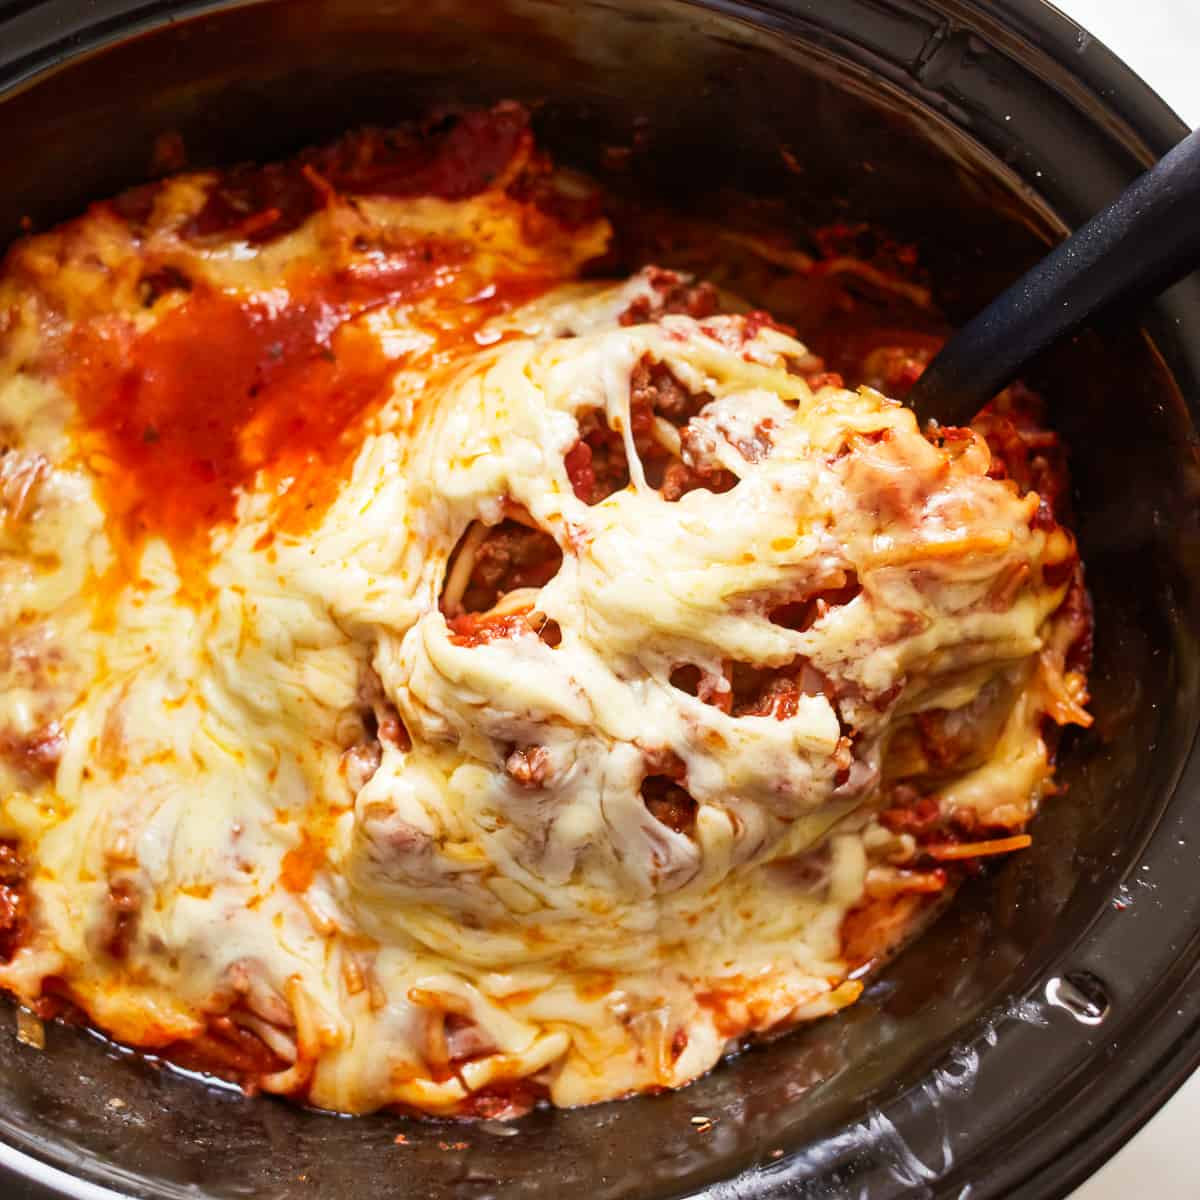 https://www.thecookierookie.com/wp-content/uploads/2023/04/featured-crockpot-spaghetti-casserole-recipe.jpg